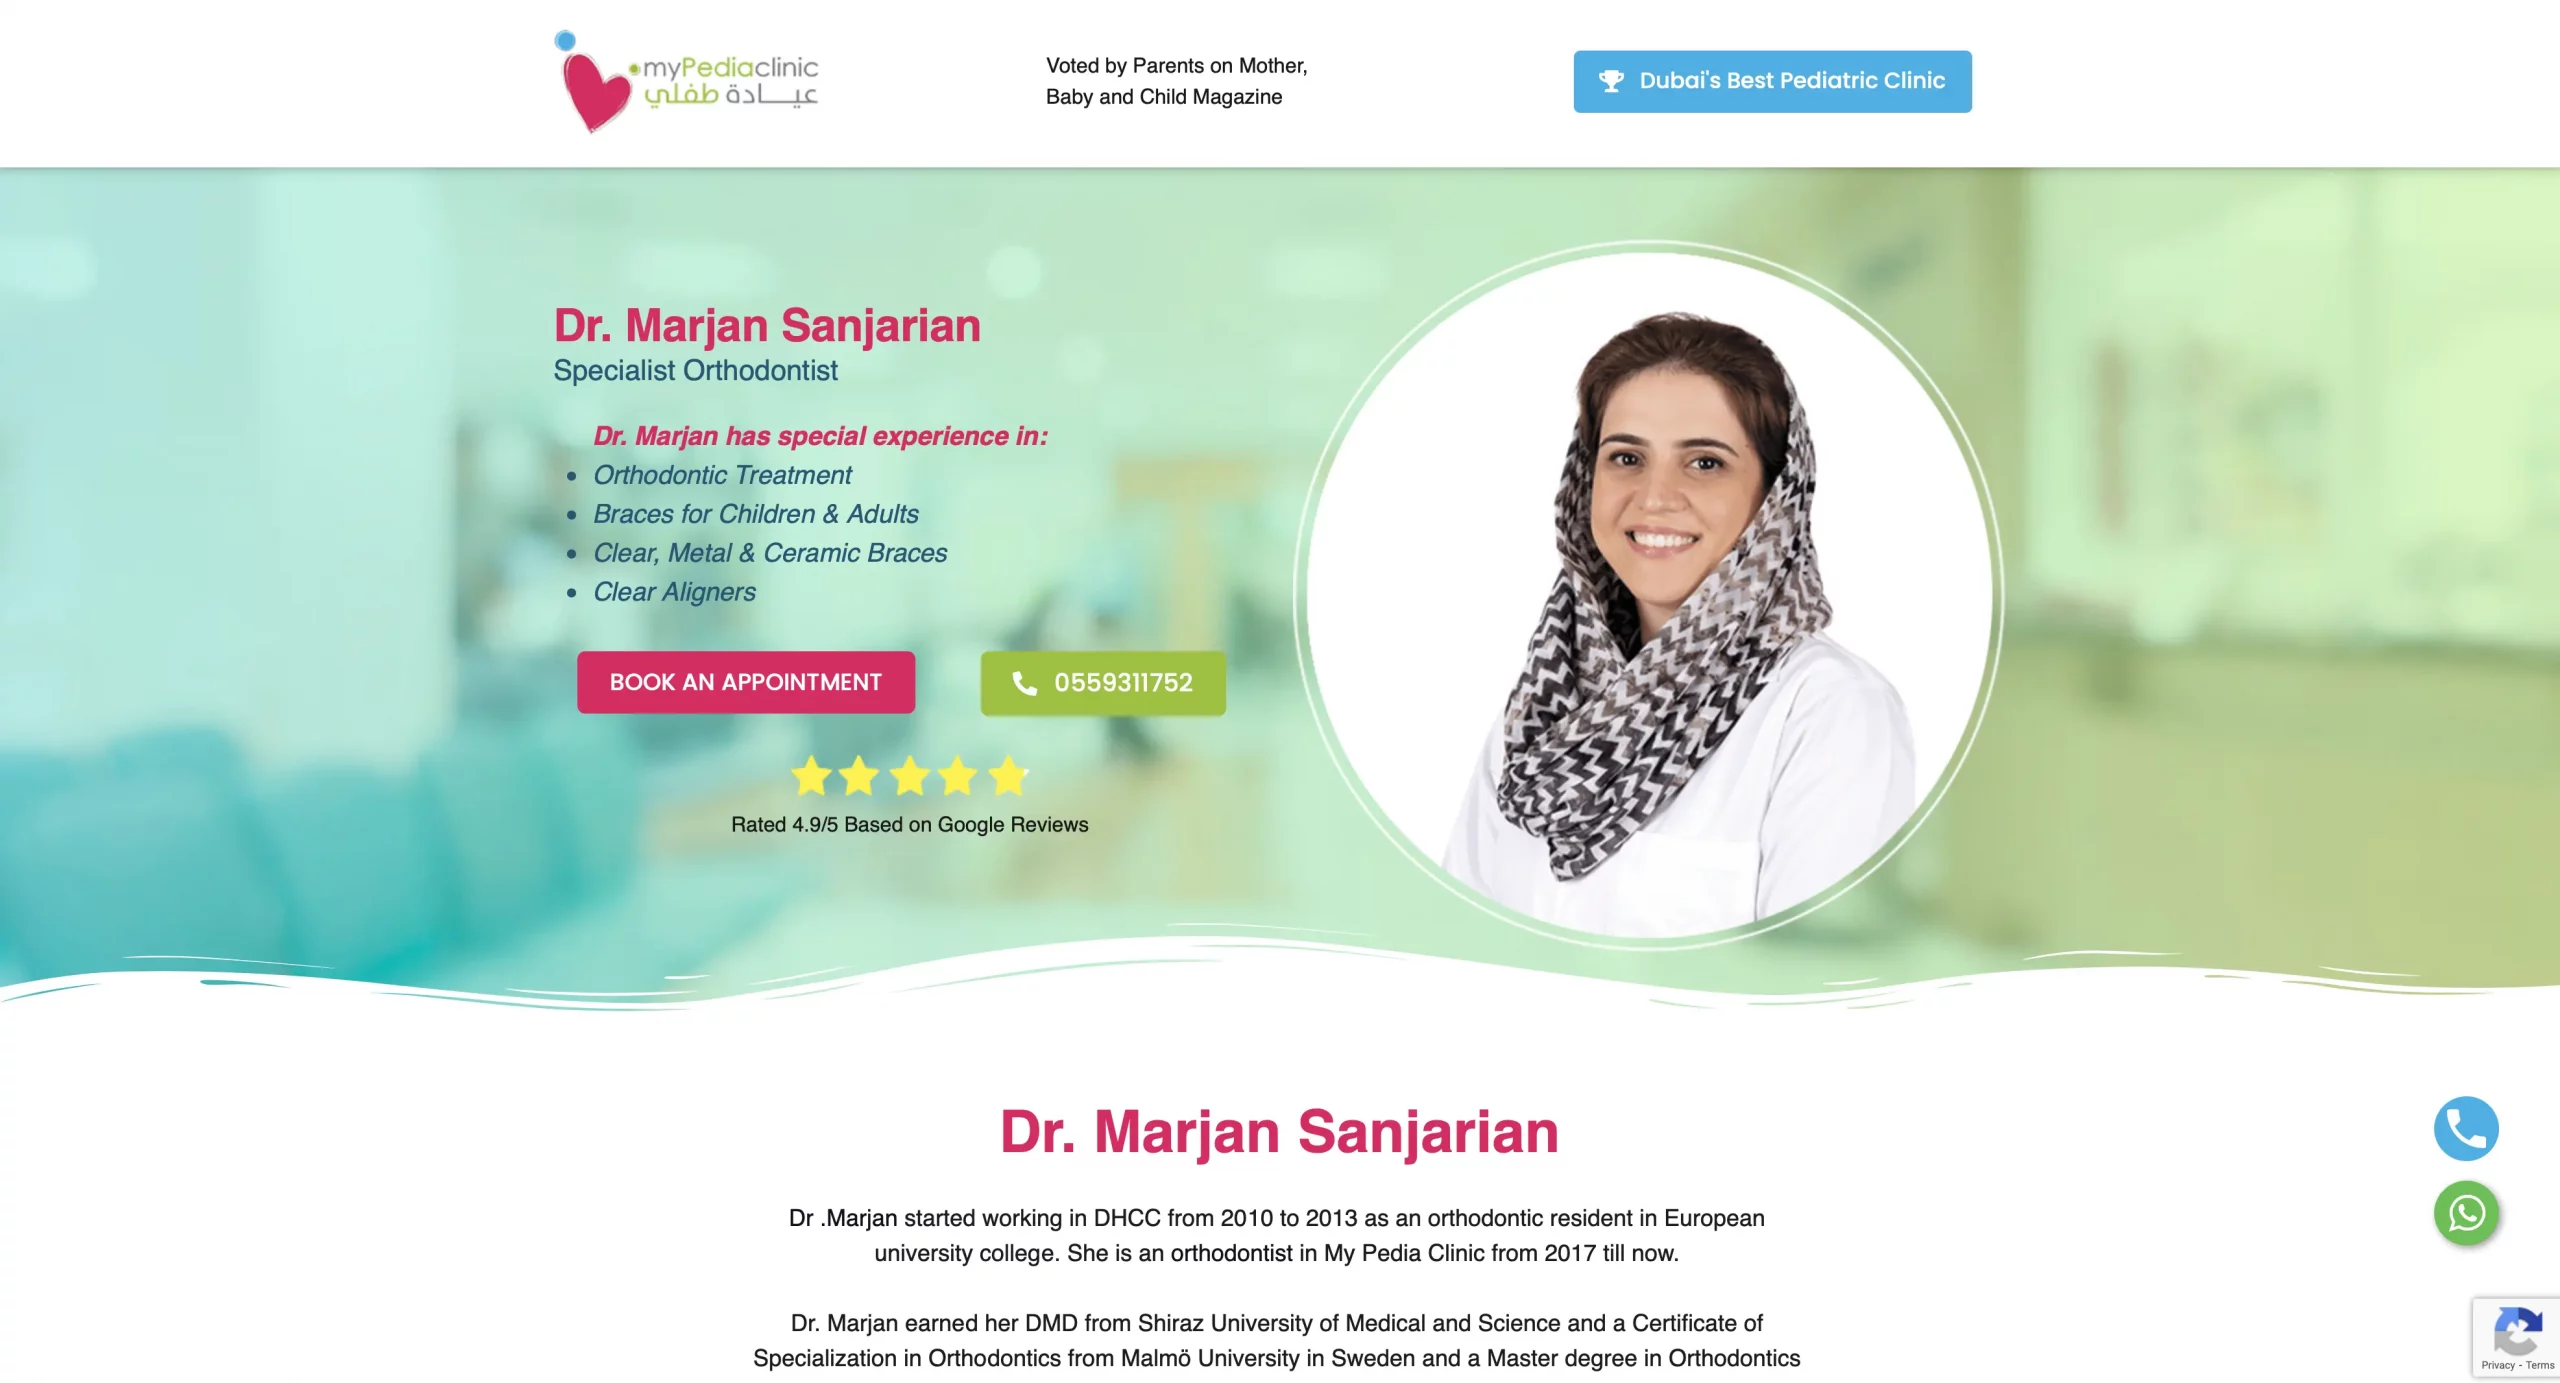 Dr. Marjan